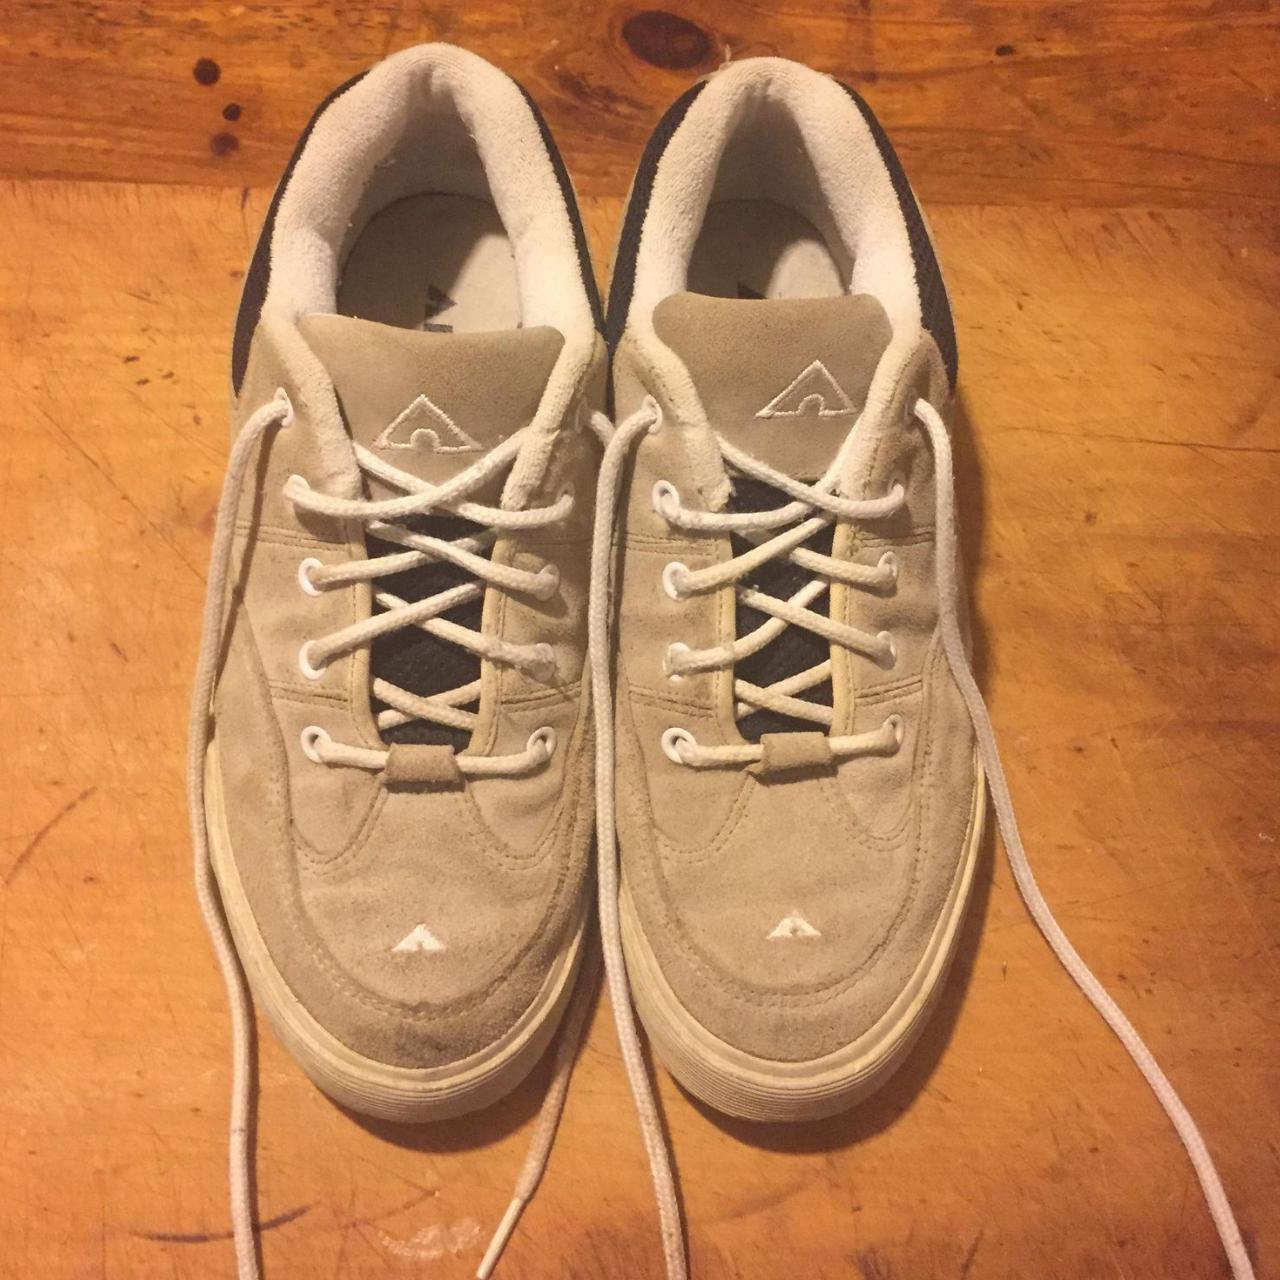 good condition airwalk shoes size 8 - Depop